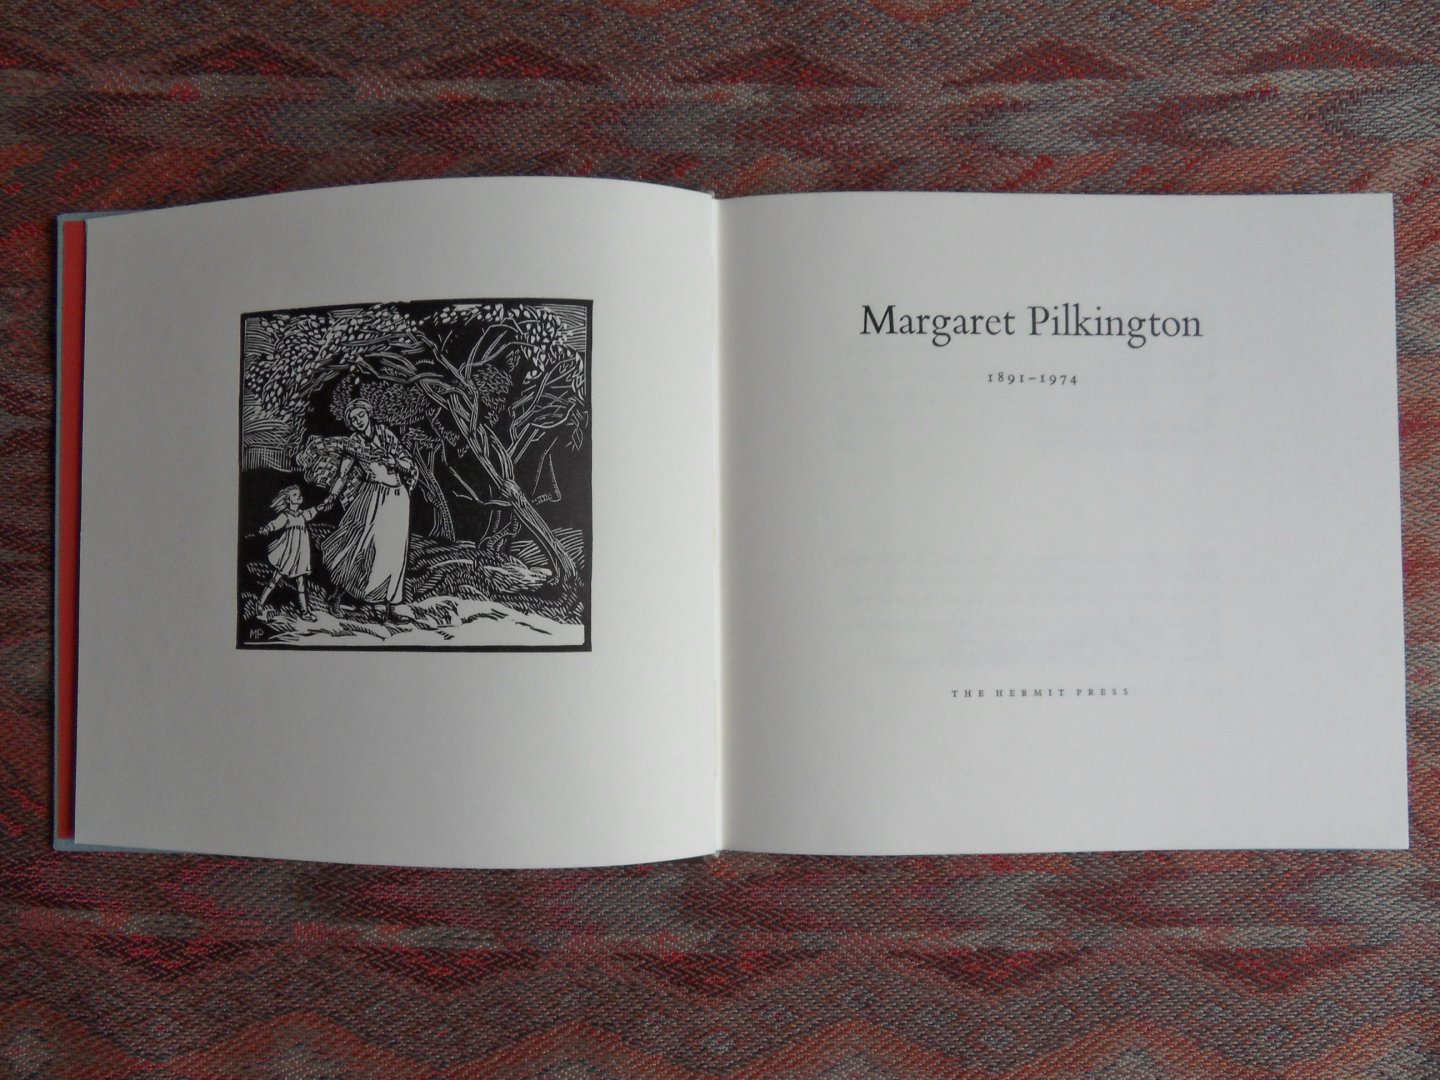 Blamires, David [A bibliographical essay]; Jaffé, Patricia [MP as a wood engraver]; Hyde, Sarah [Catalogue of engraved work]. - Margaret Pilkington. 1891 - 1974. [Genummerd ex. 41 / 175 ].